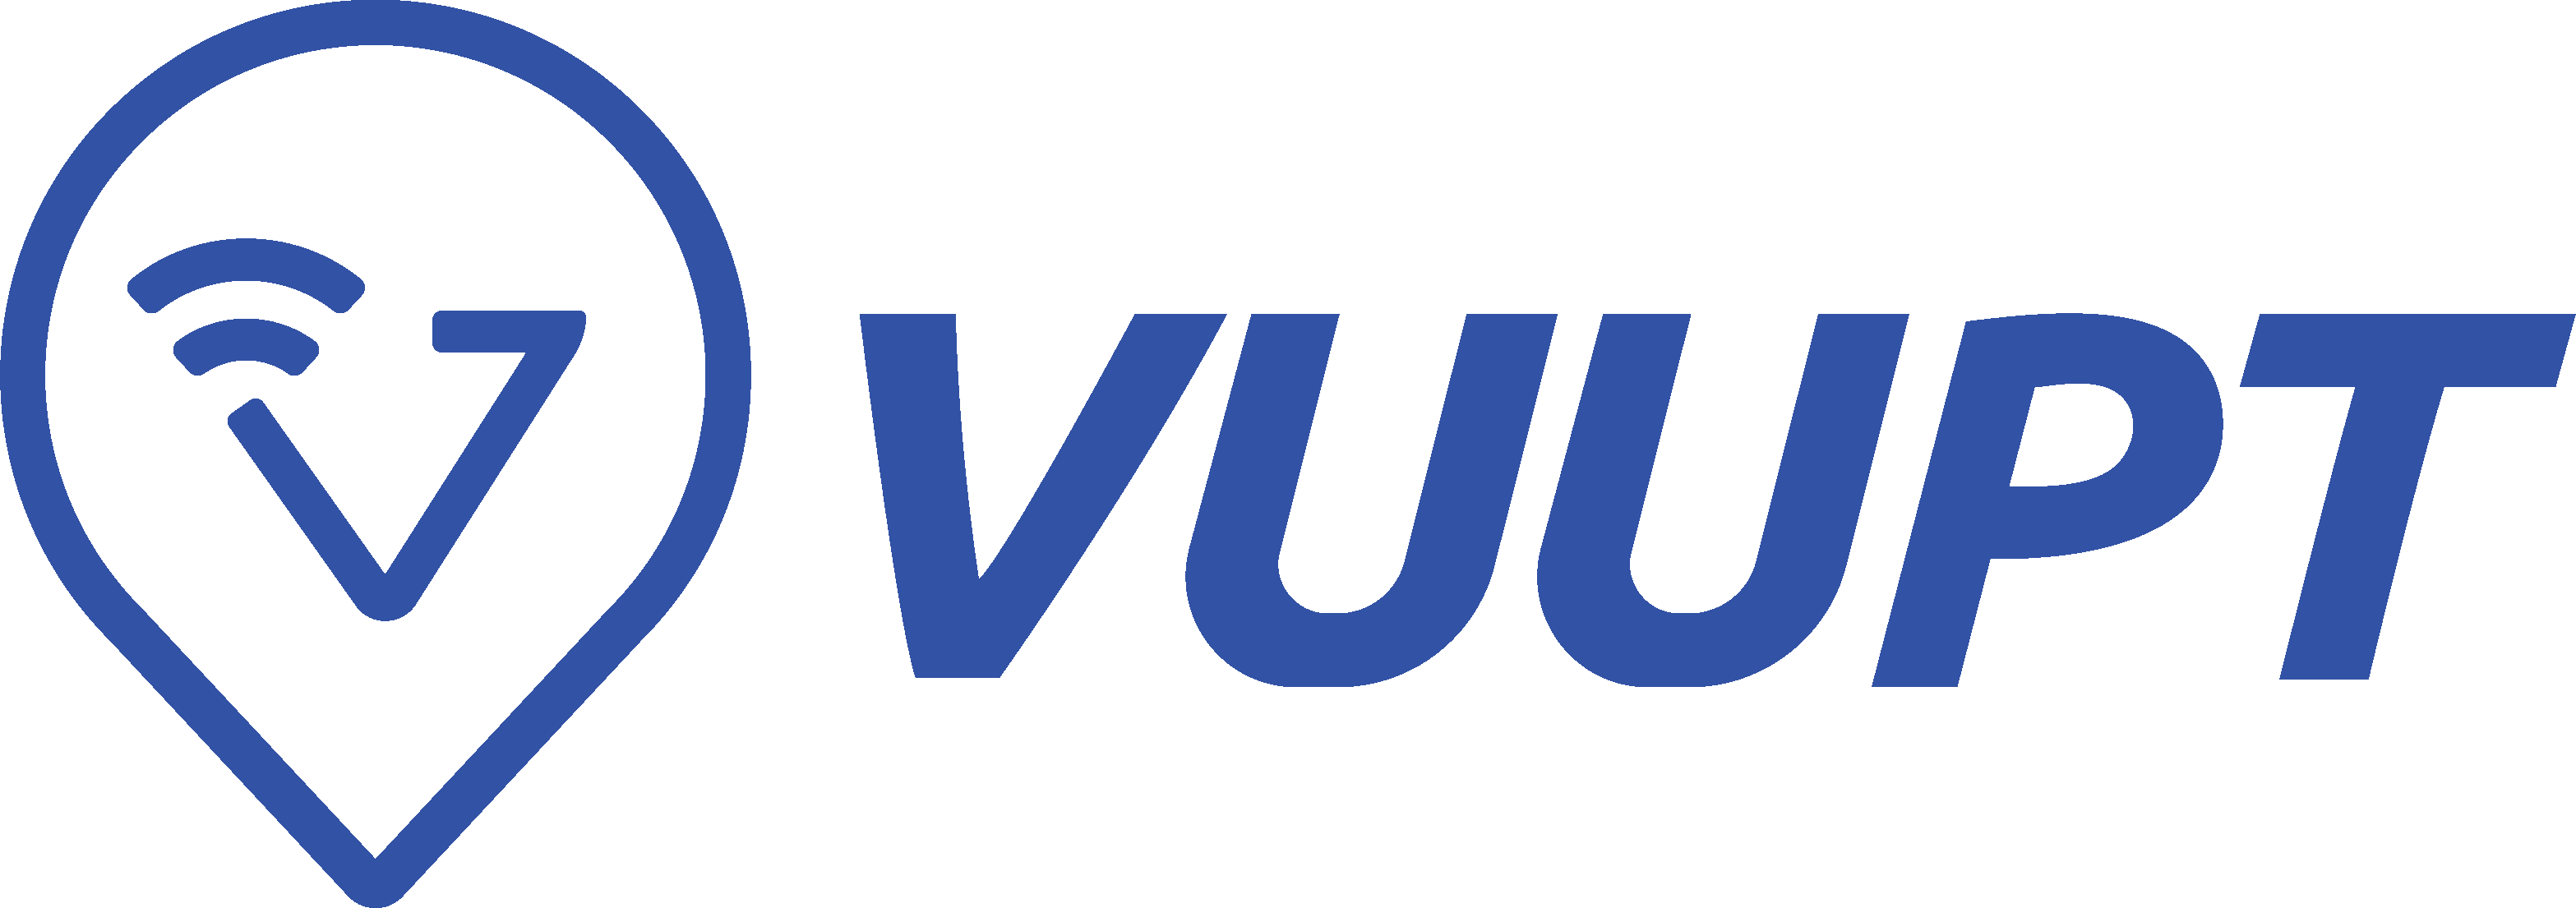 logo vuupt